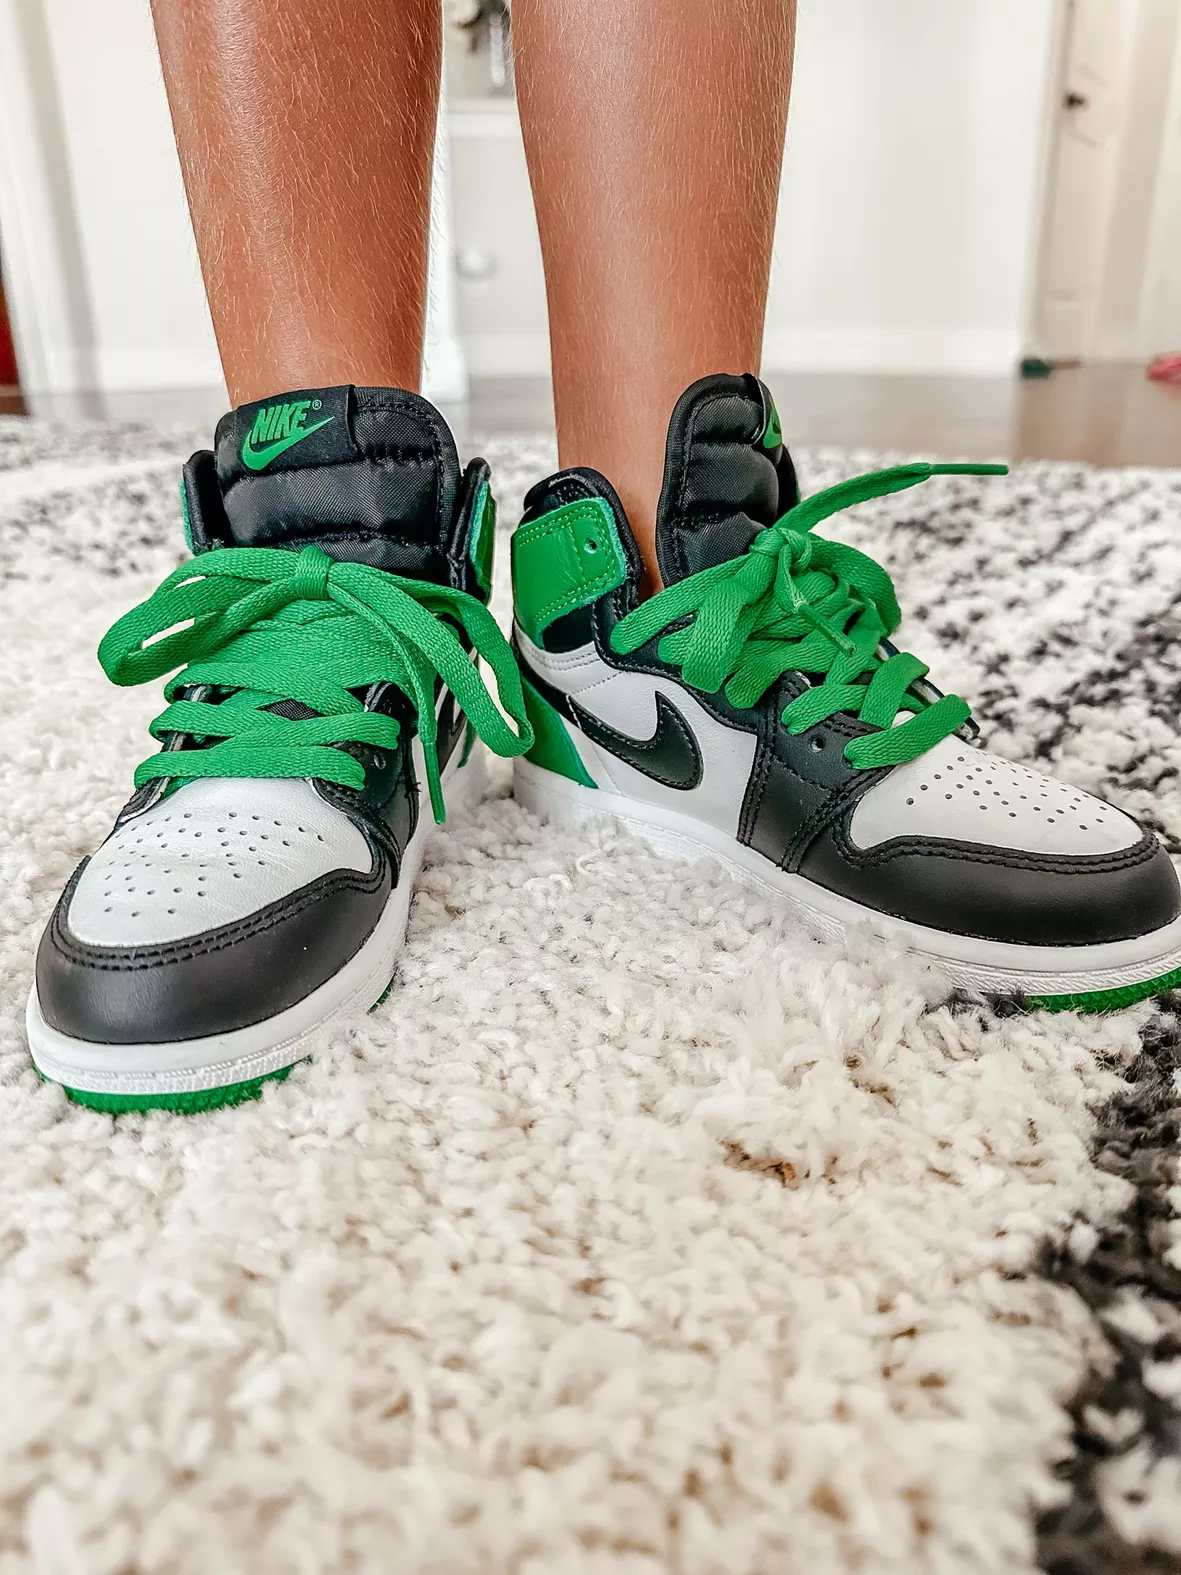 Kids' Nike Shoes, Sneakers